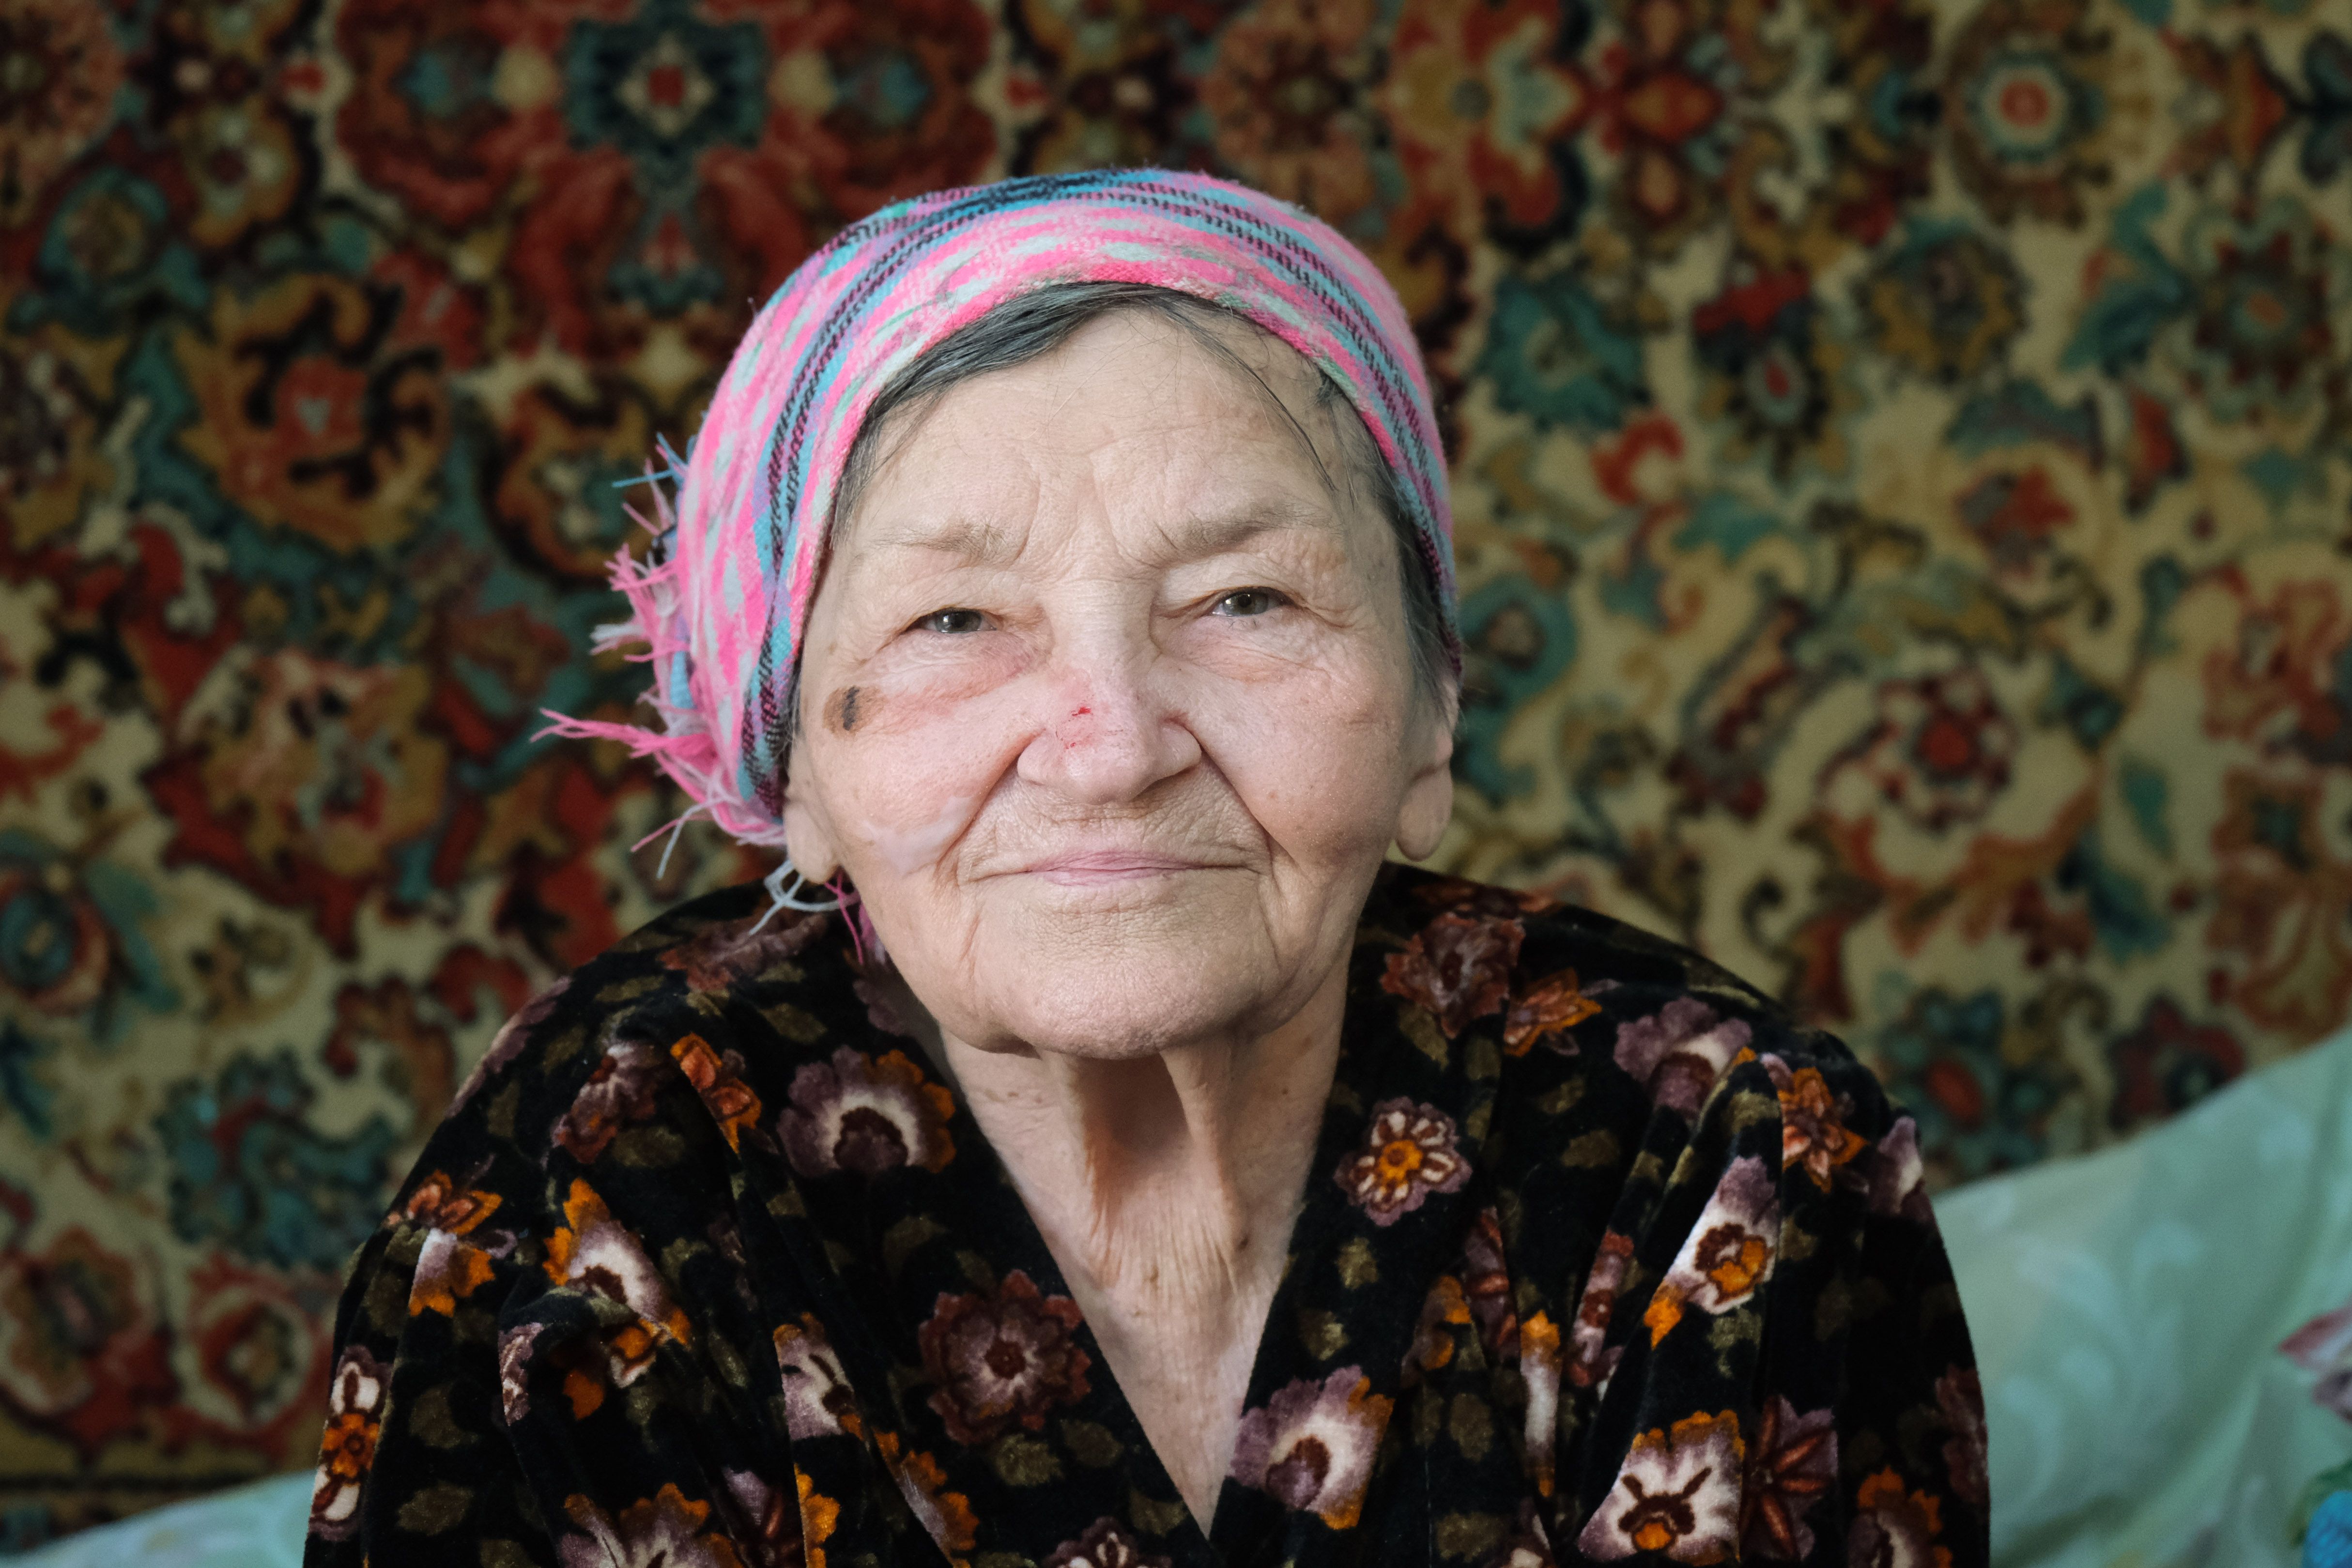 Бабушка полное видео. Кубанская бабушка. Бабушка 96 лет. Фото бабушки. Бабушка казачка.